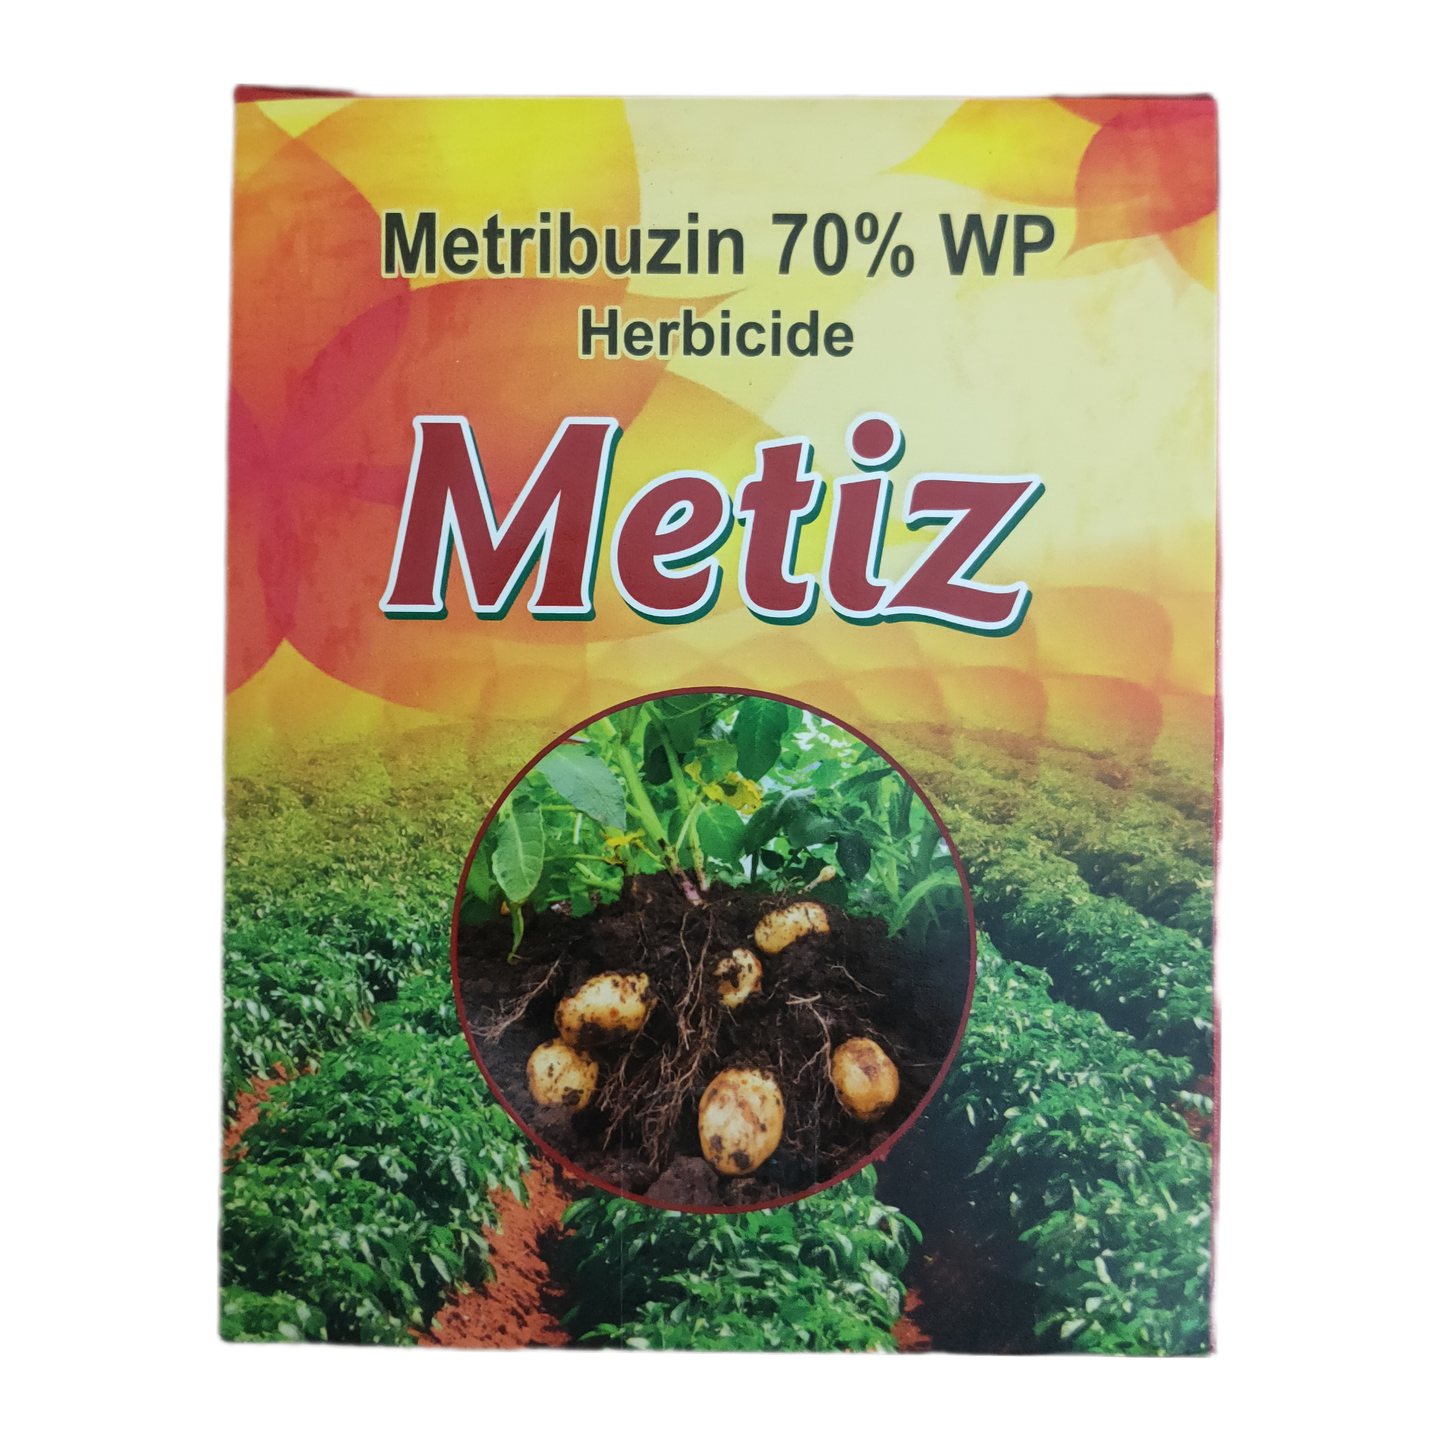 Metiz - Metribuzin 70% WP Selective Herbicide